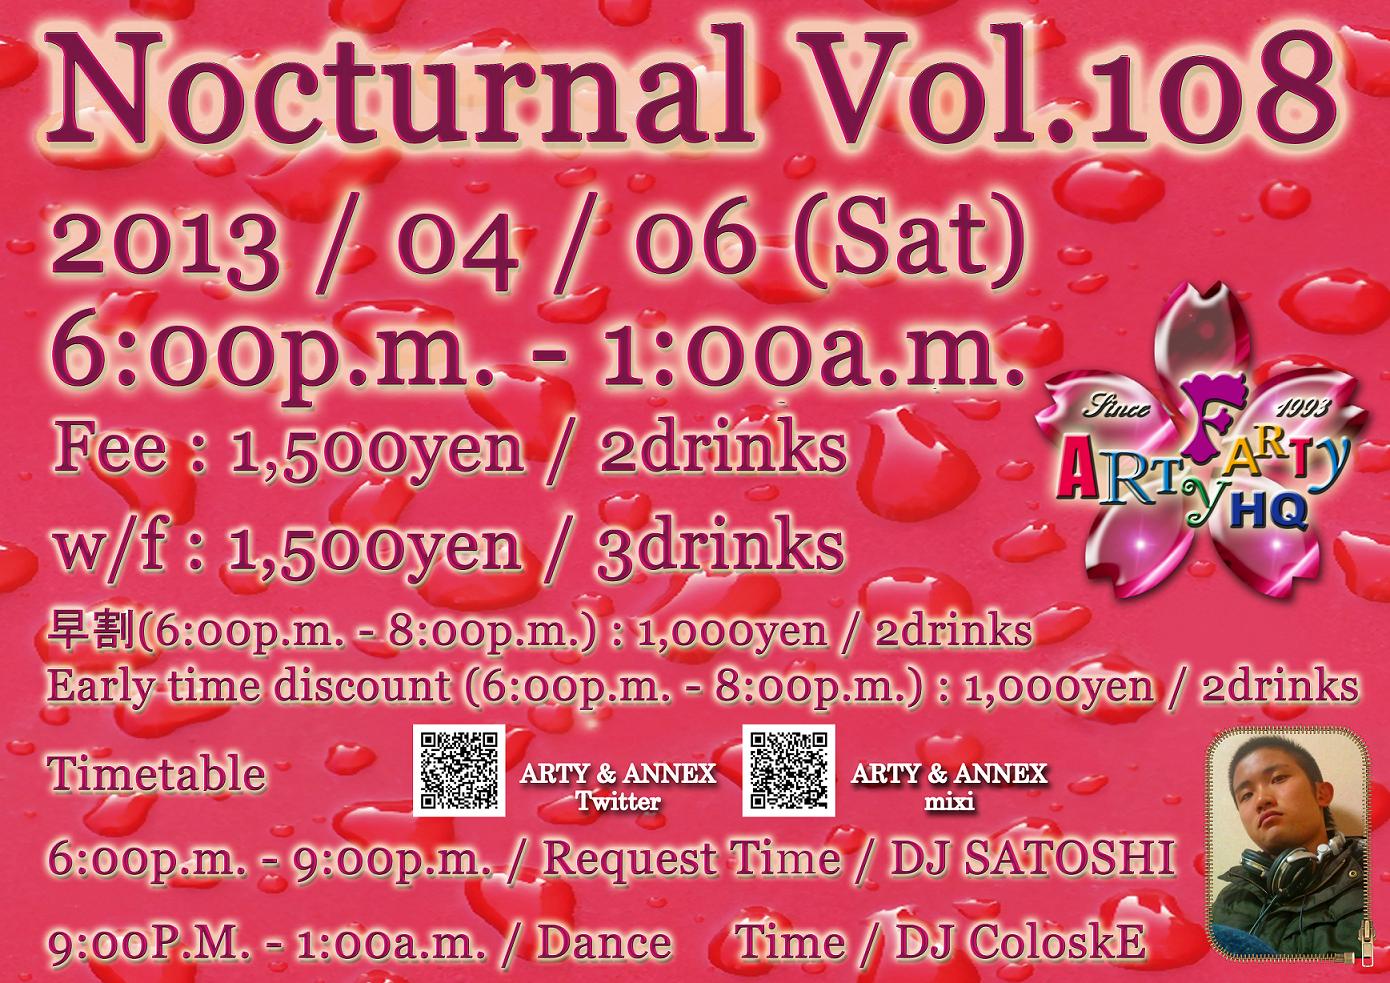 Nocturnal Vol.108   2013/04/06  - 1390x983 288.1kb